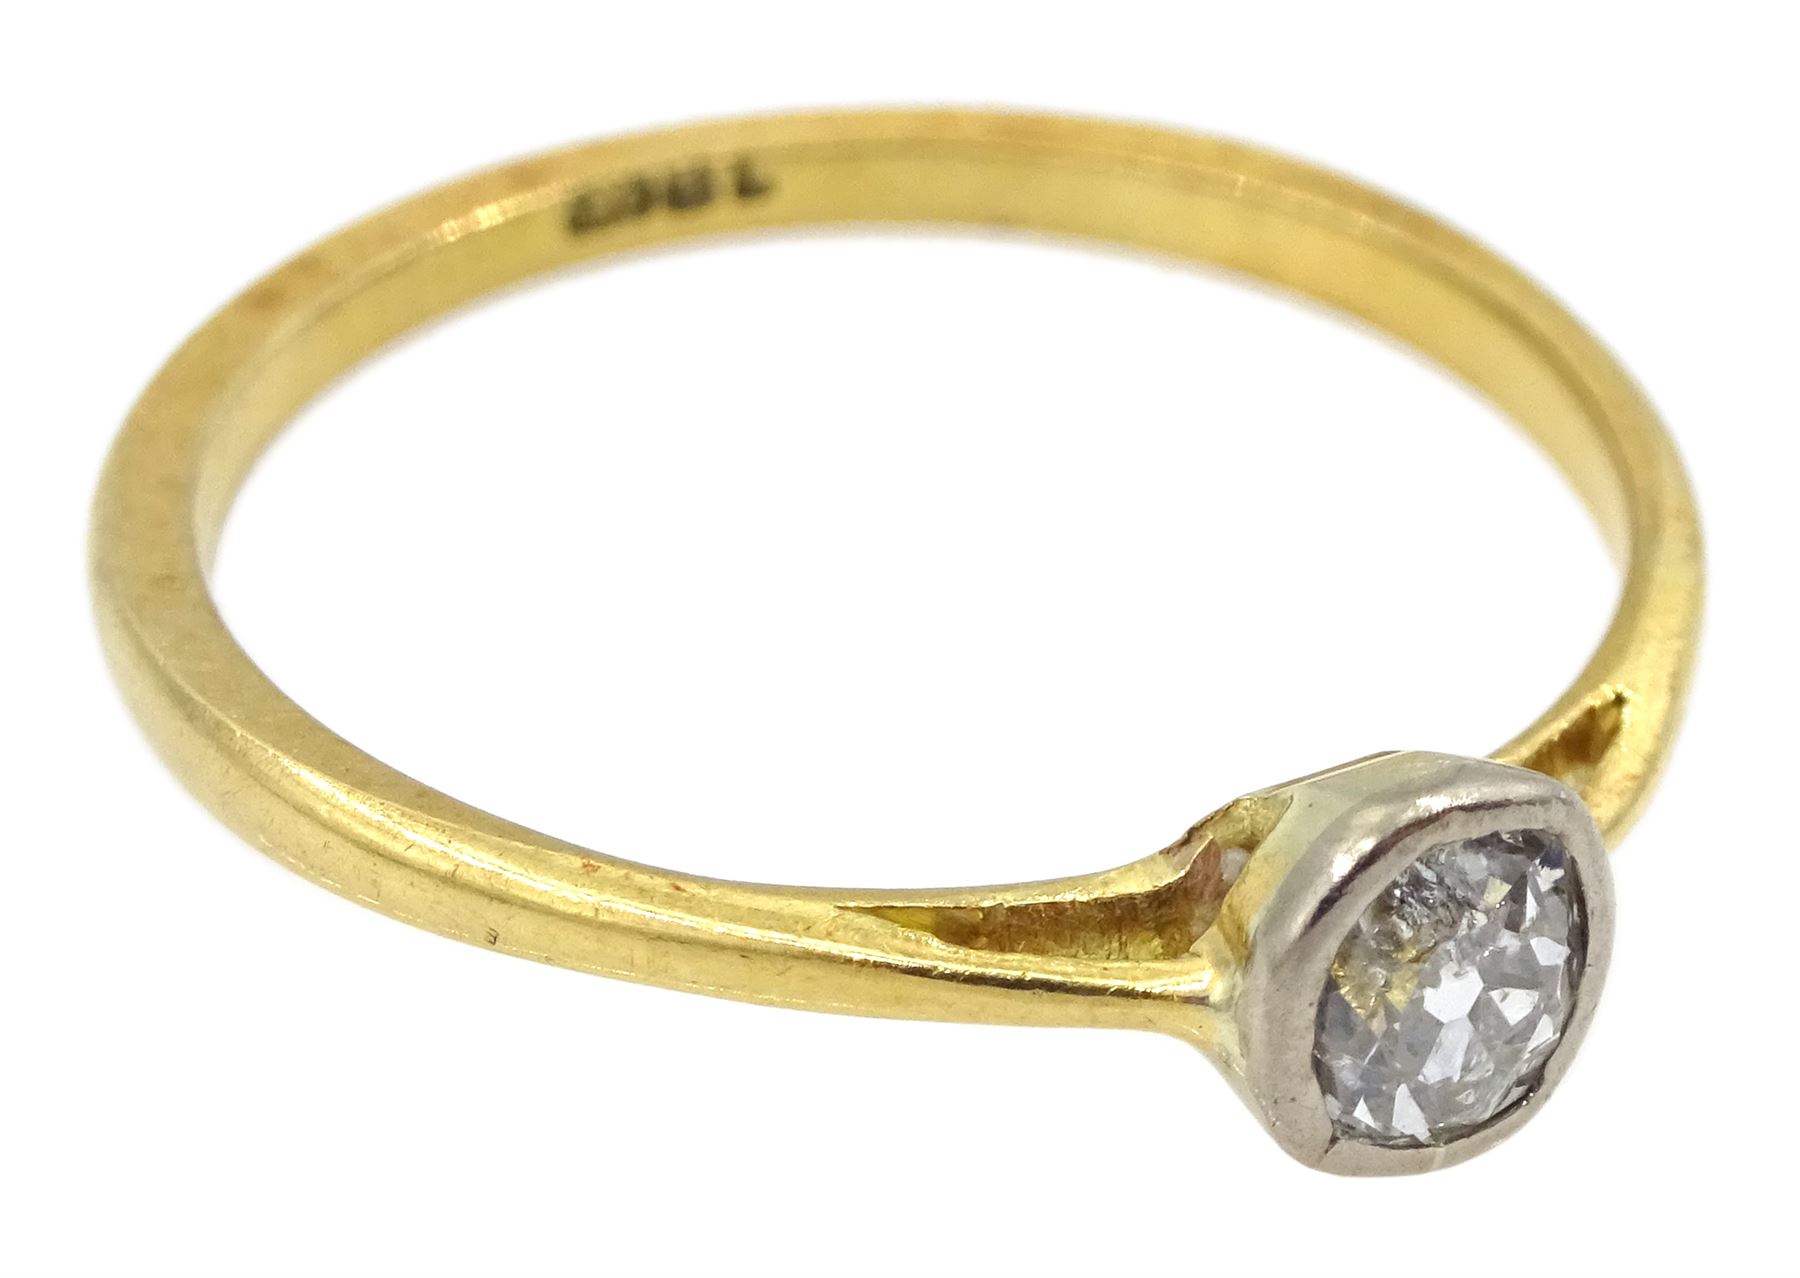 Early-mid 20th century gold bezel set single stone old cut diamond ring - Image 3 of 4